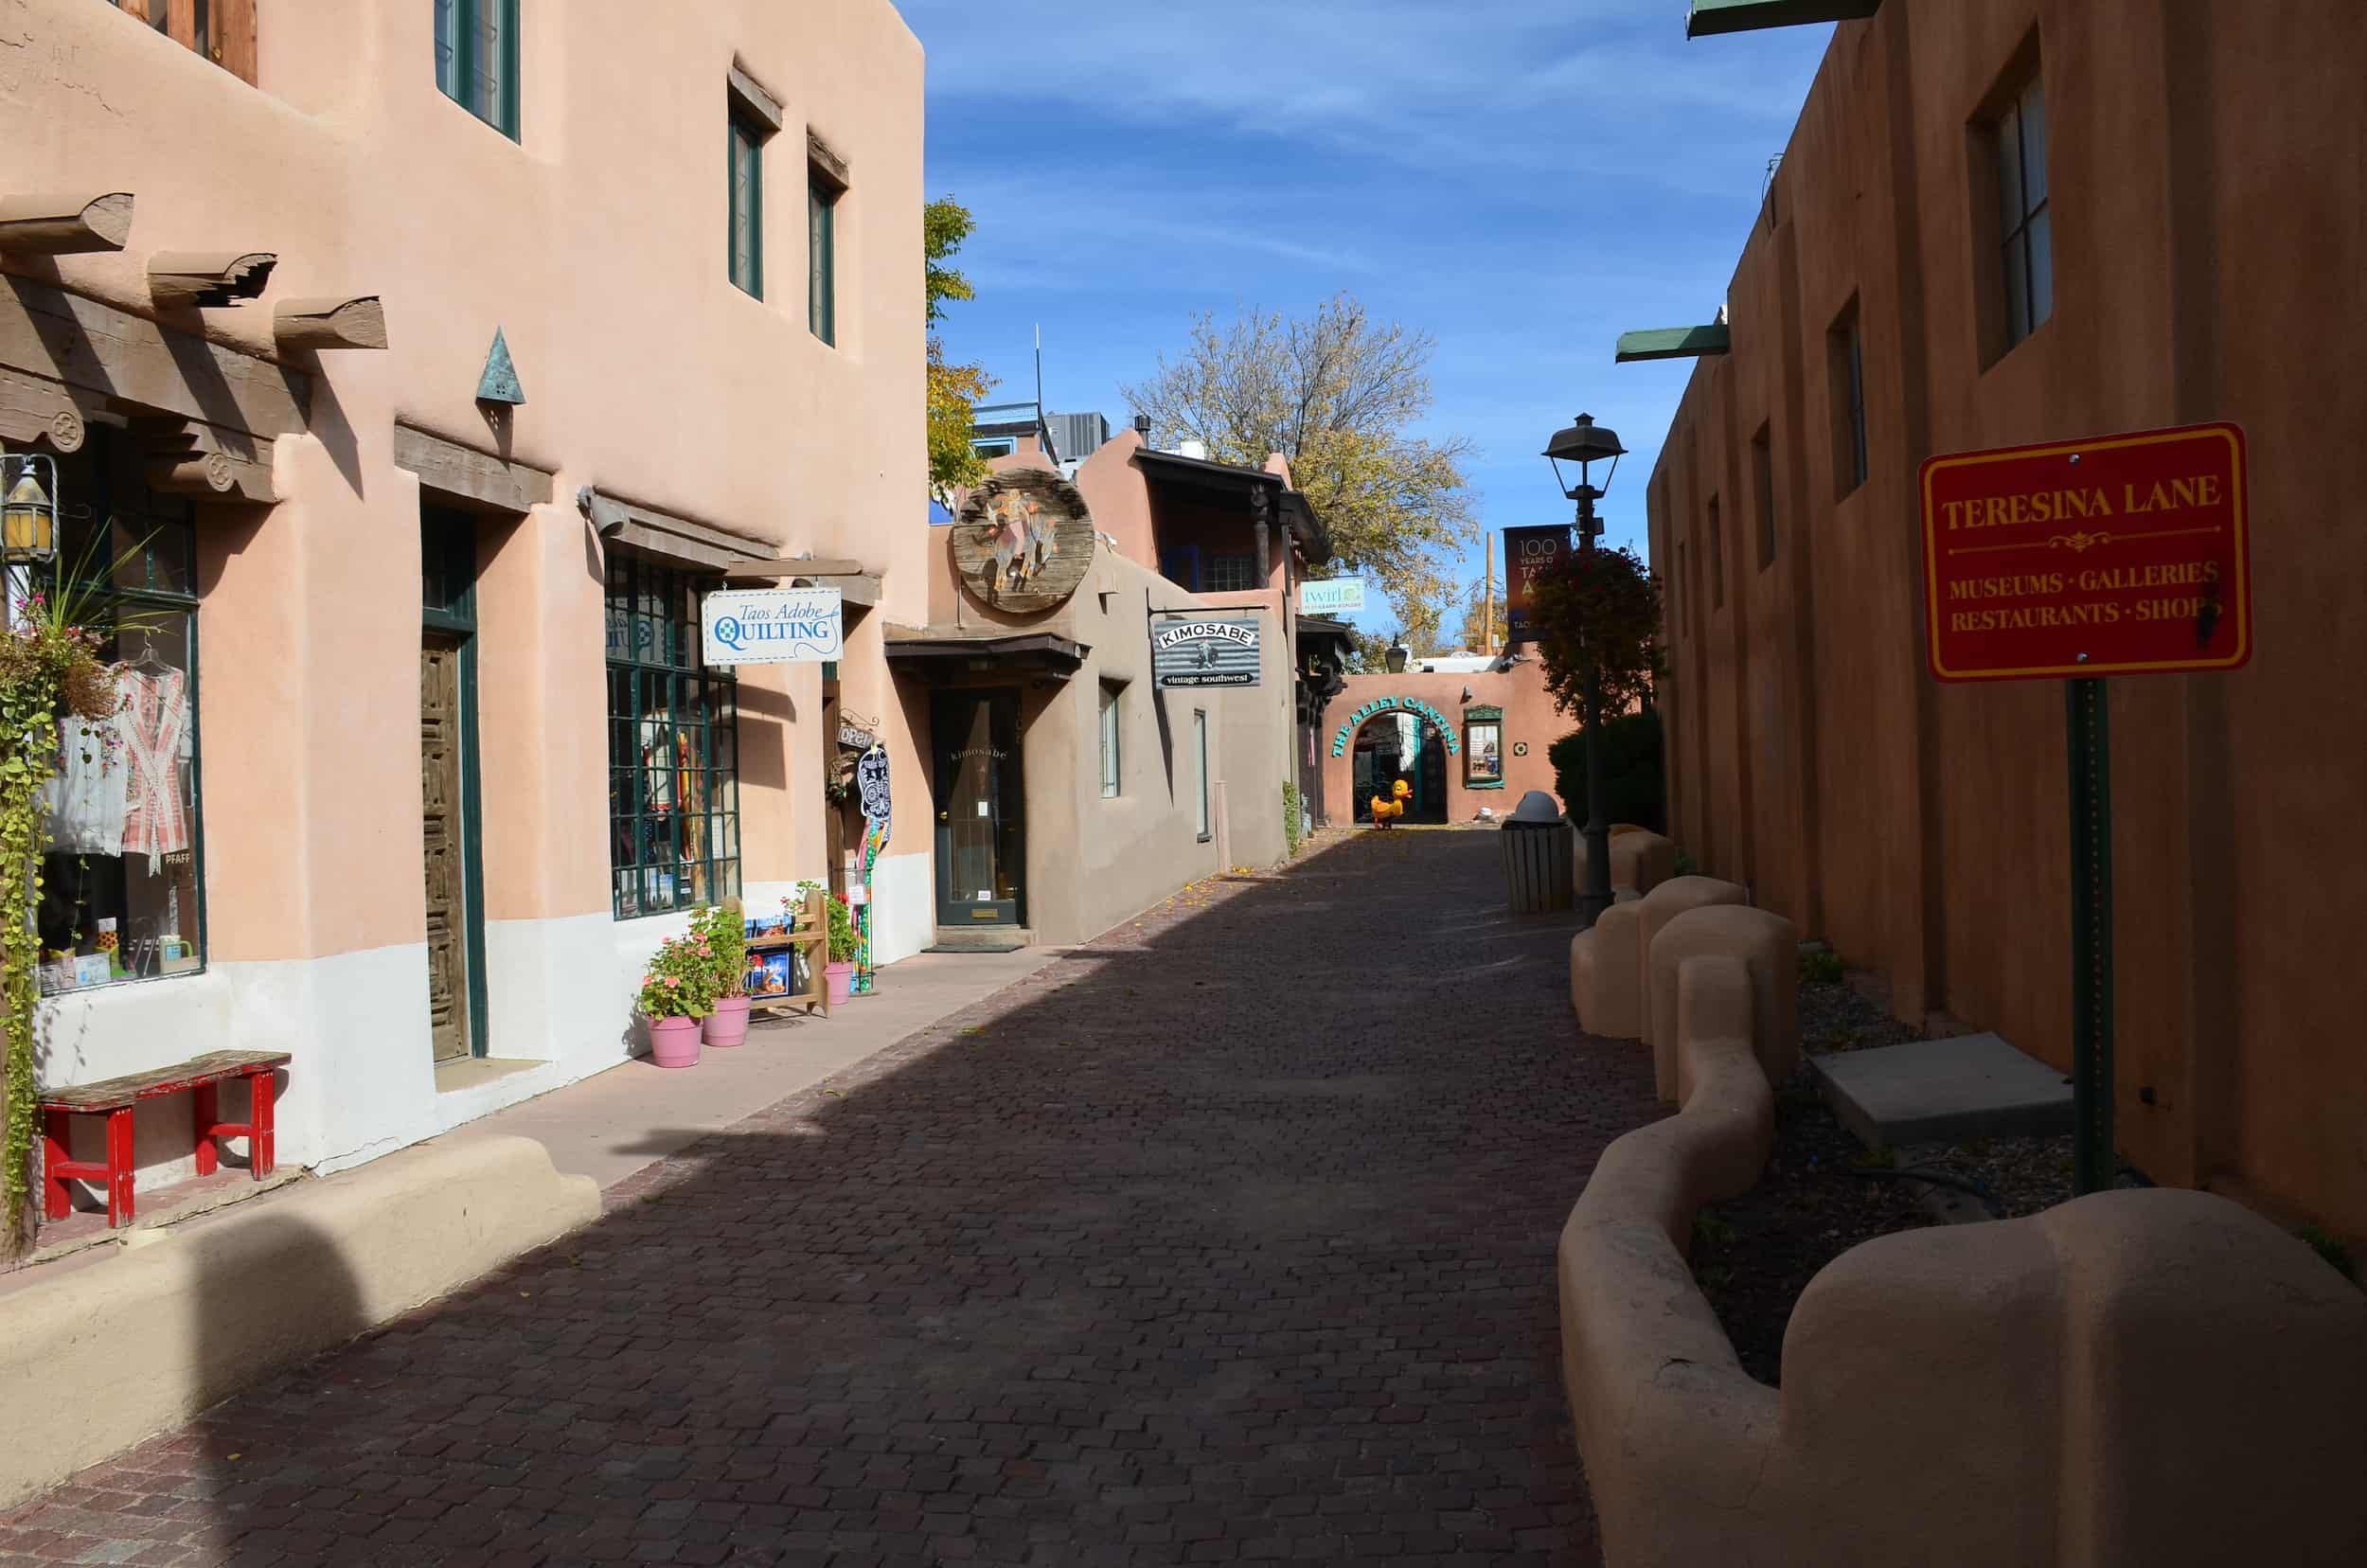 Teresita Lane in the Downtown Taos Historic District of Taos, New Mexico